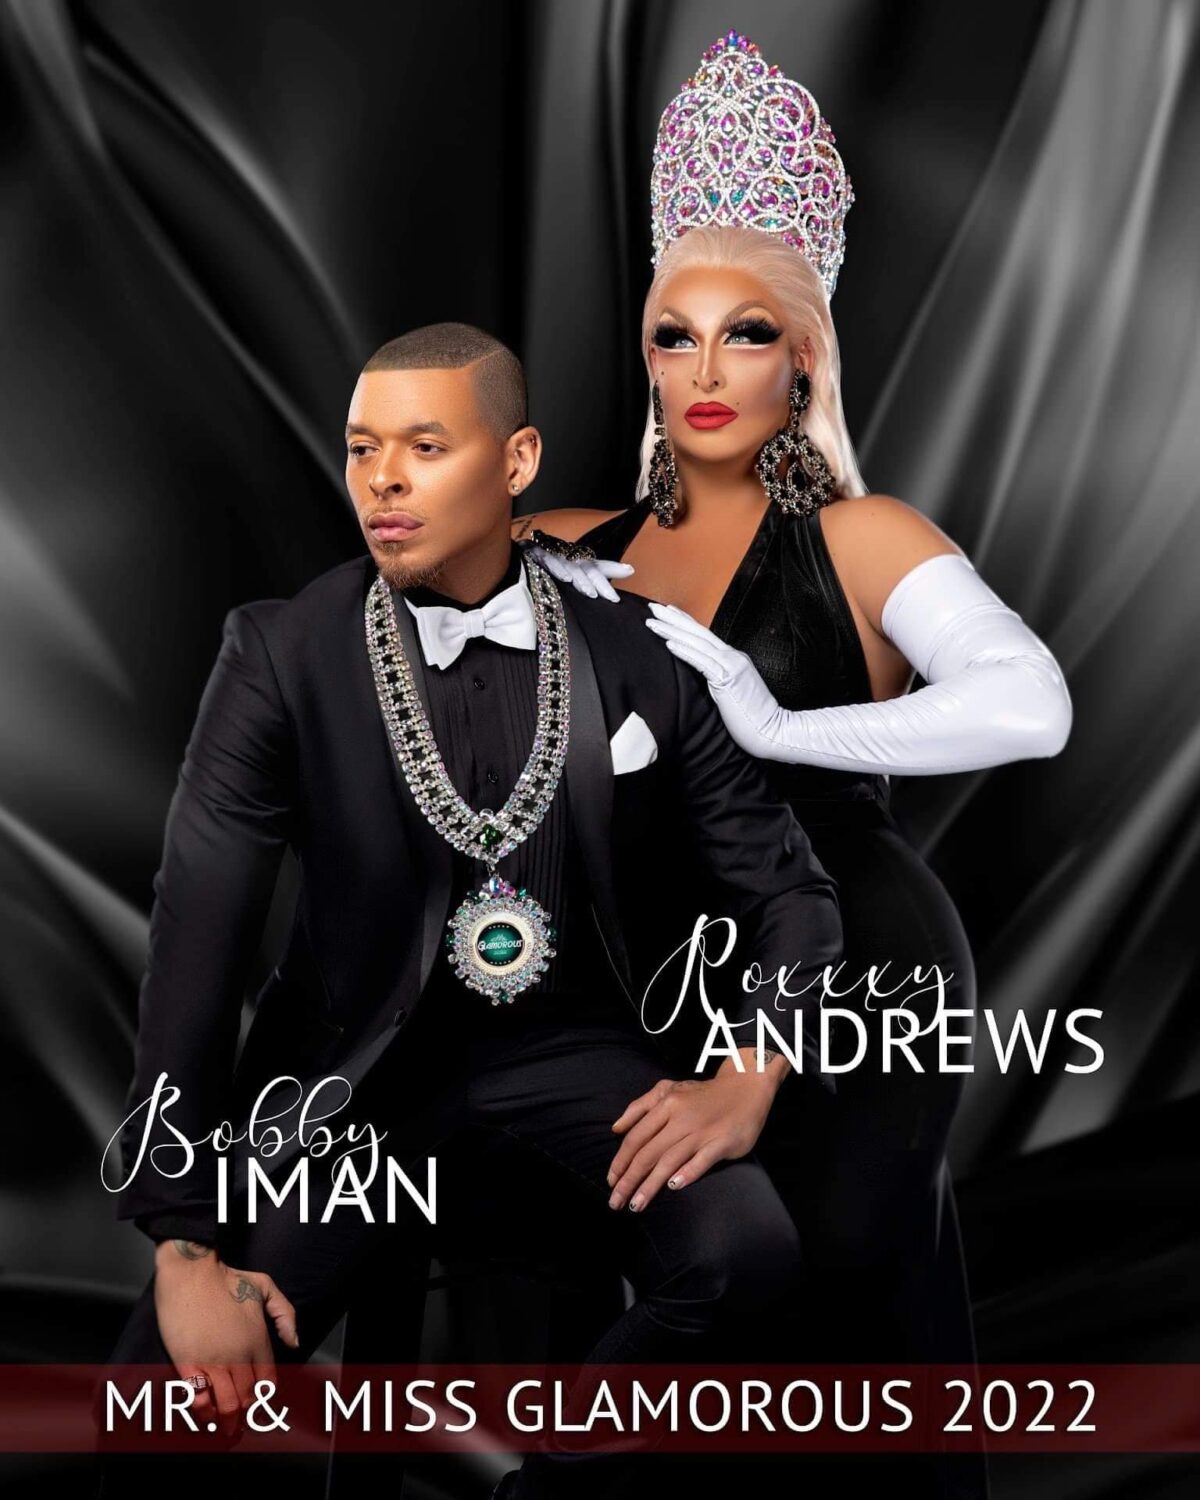 Bobby Iman (Mr. Glamorous 2022) and Roxxxy Andrews (Miss Glamorous 2022) 